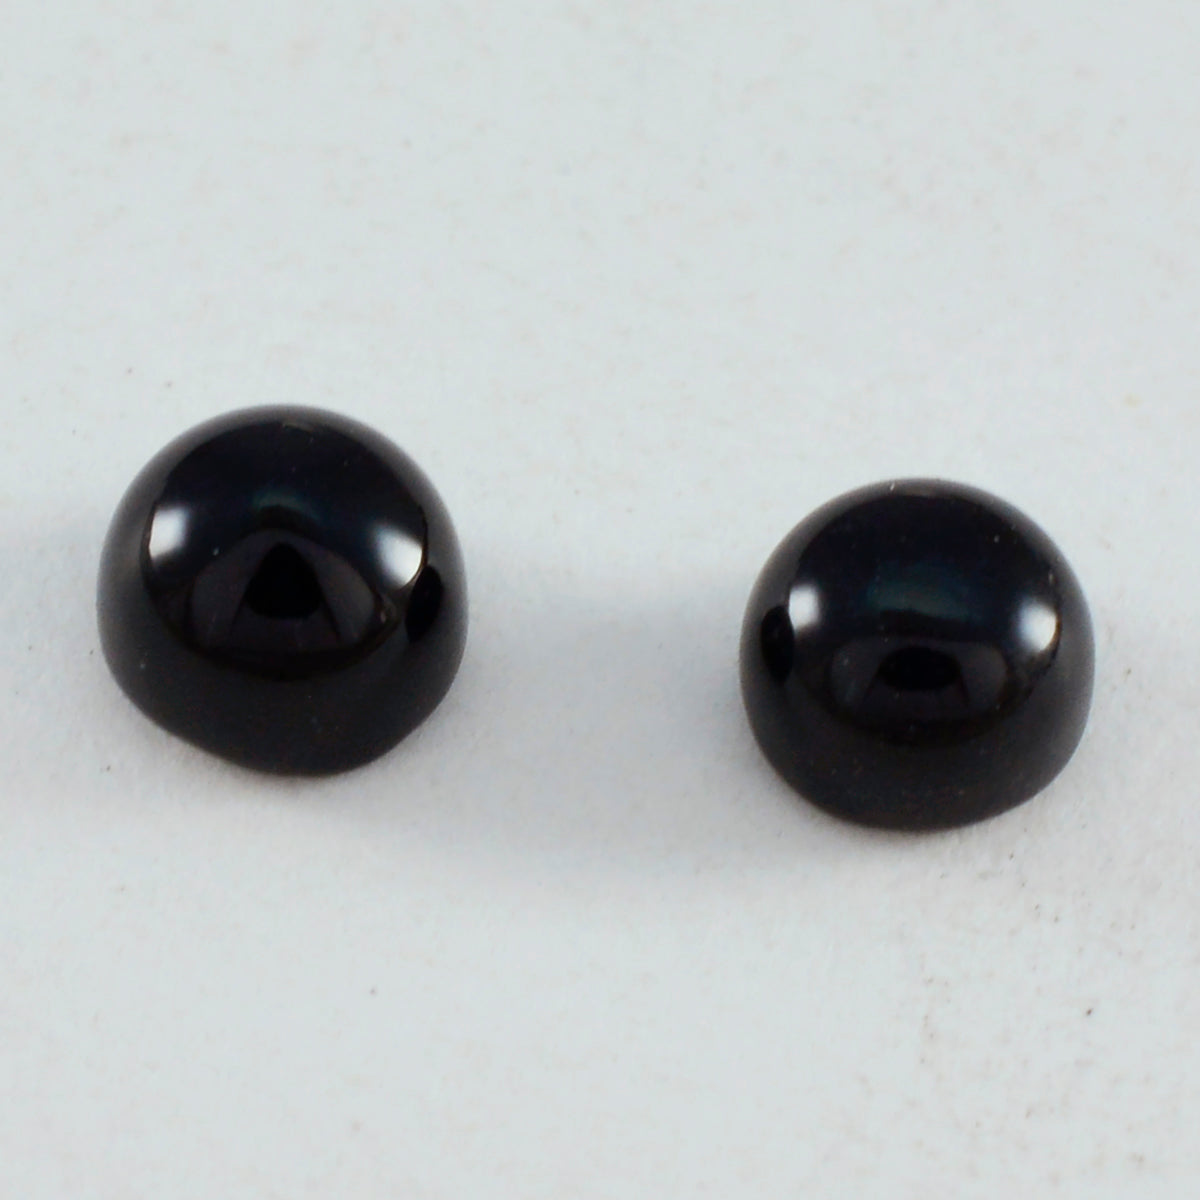 riyogems 1pc ブラック オニキス カボション 7x7 mm ラウンド形状の良質の宝石